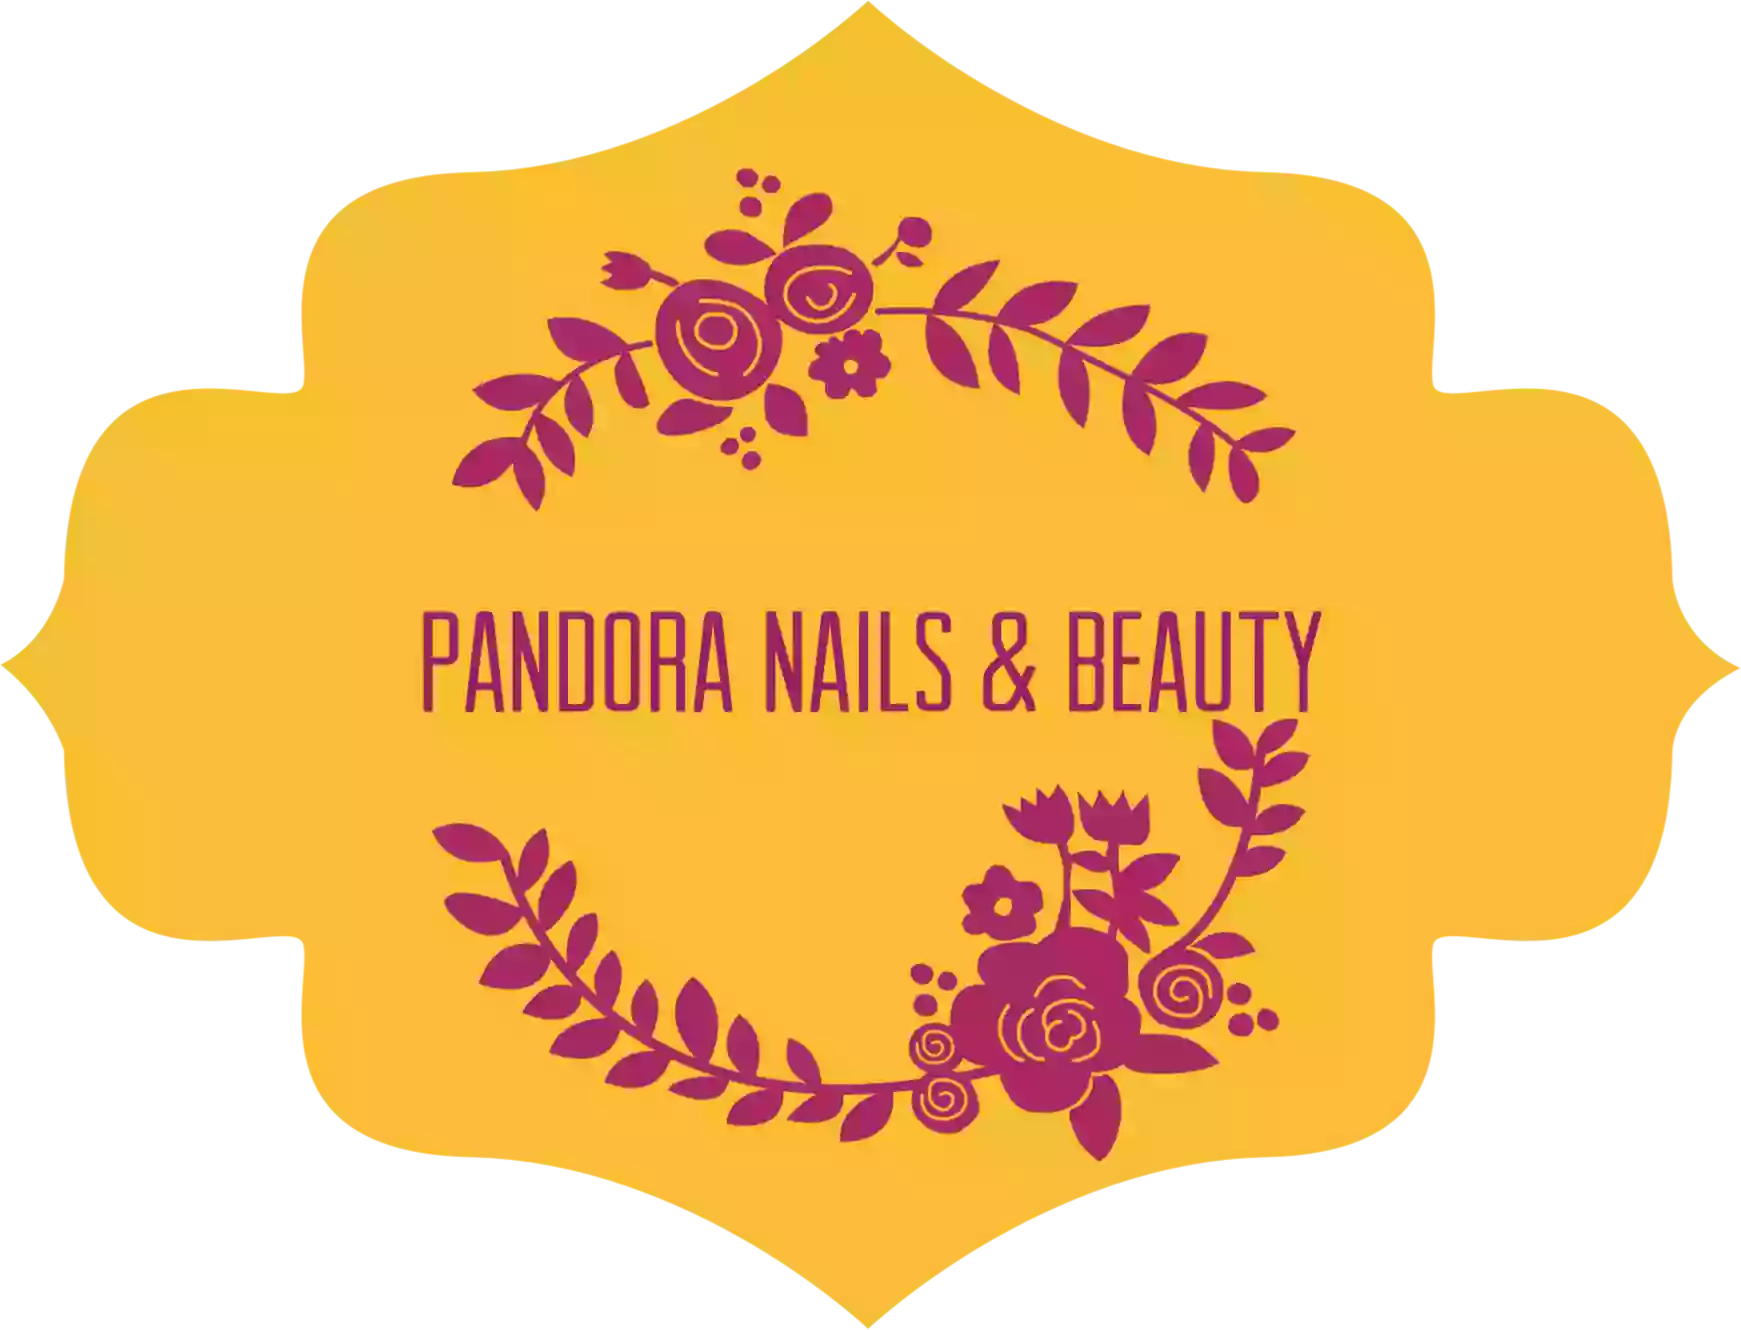 Pandora Nails & Beauty